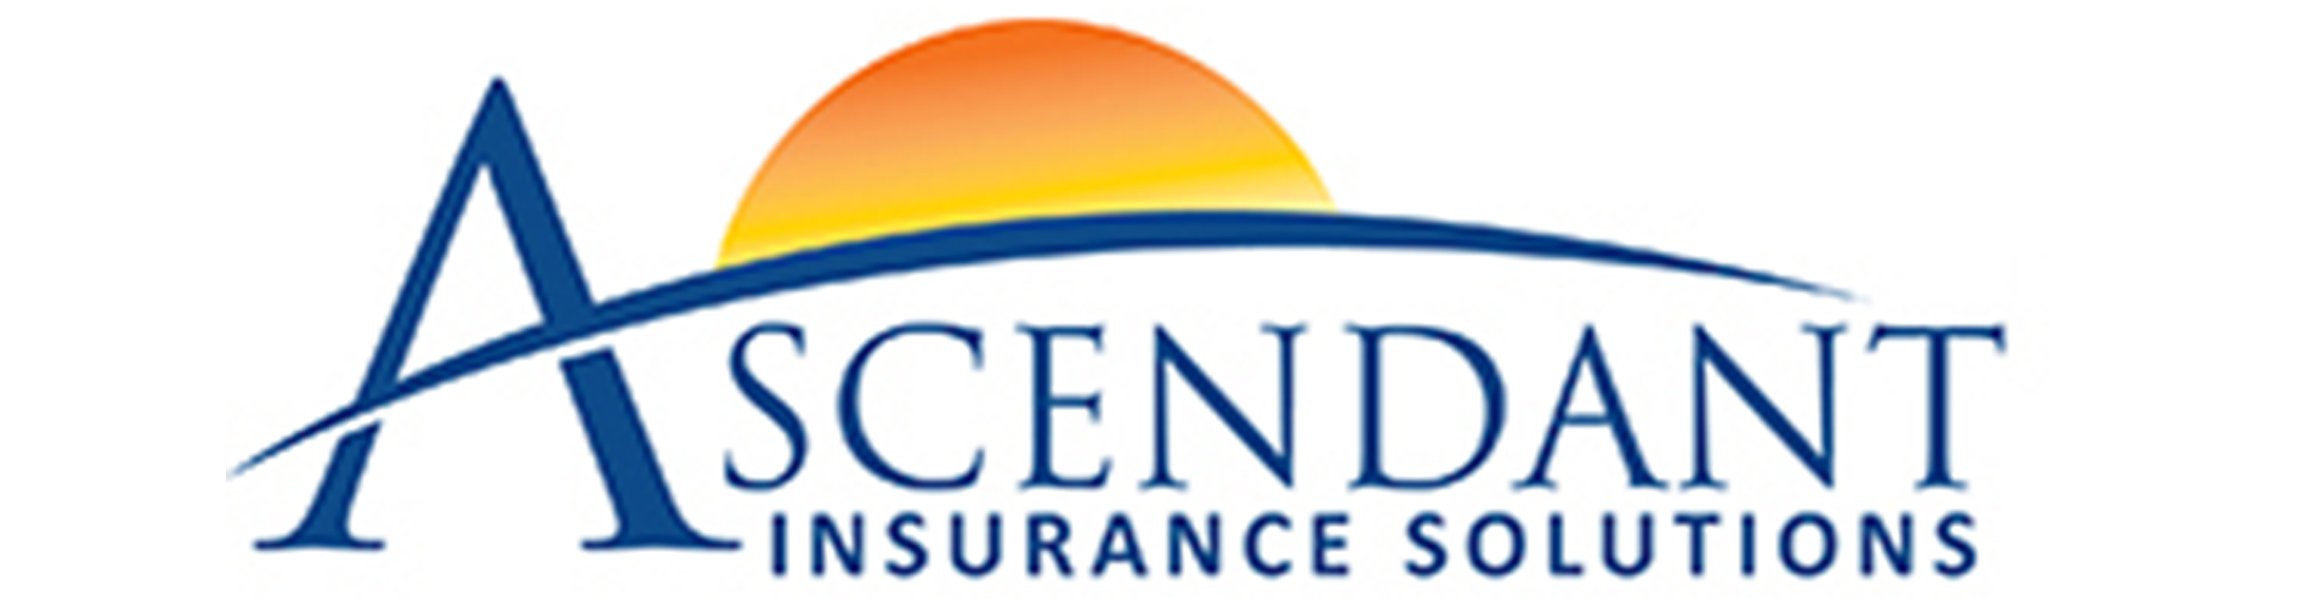 ascendant-commercial-insurance